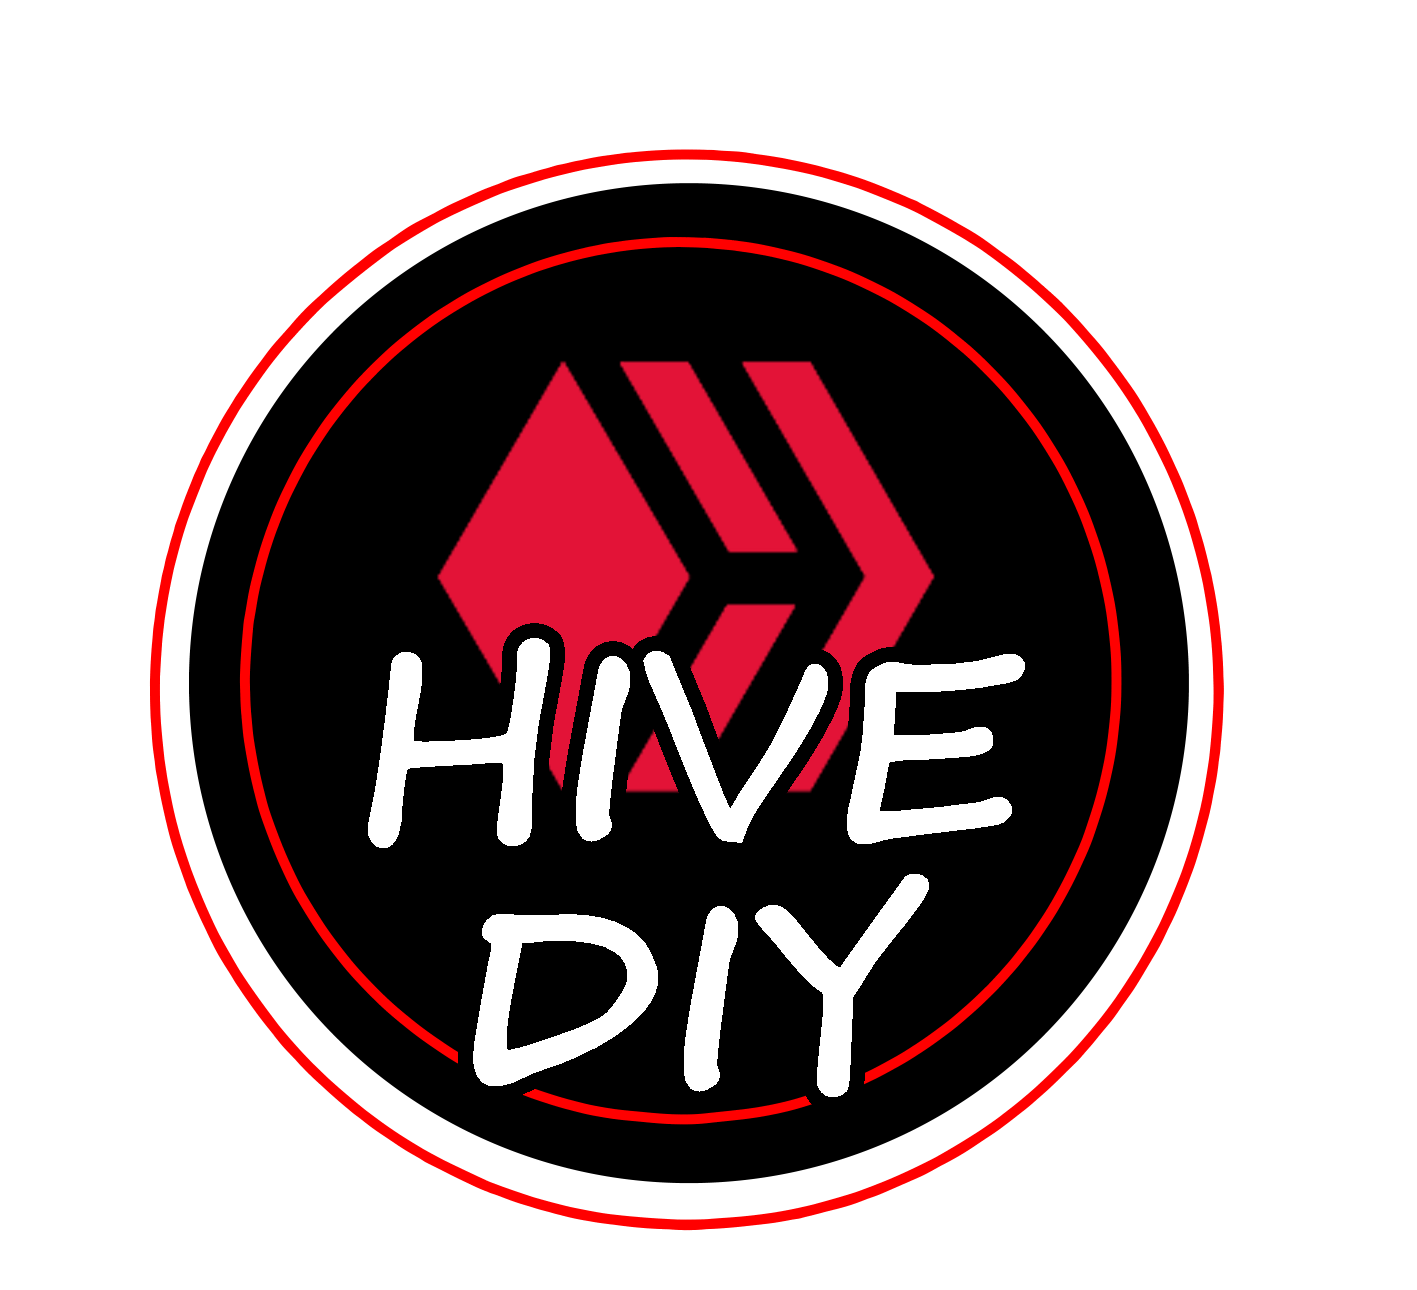 Concurso: Regreso a clases con Hive DIY, Cartuchera escolar (Esp